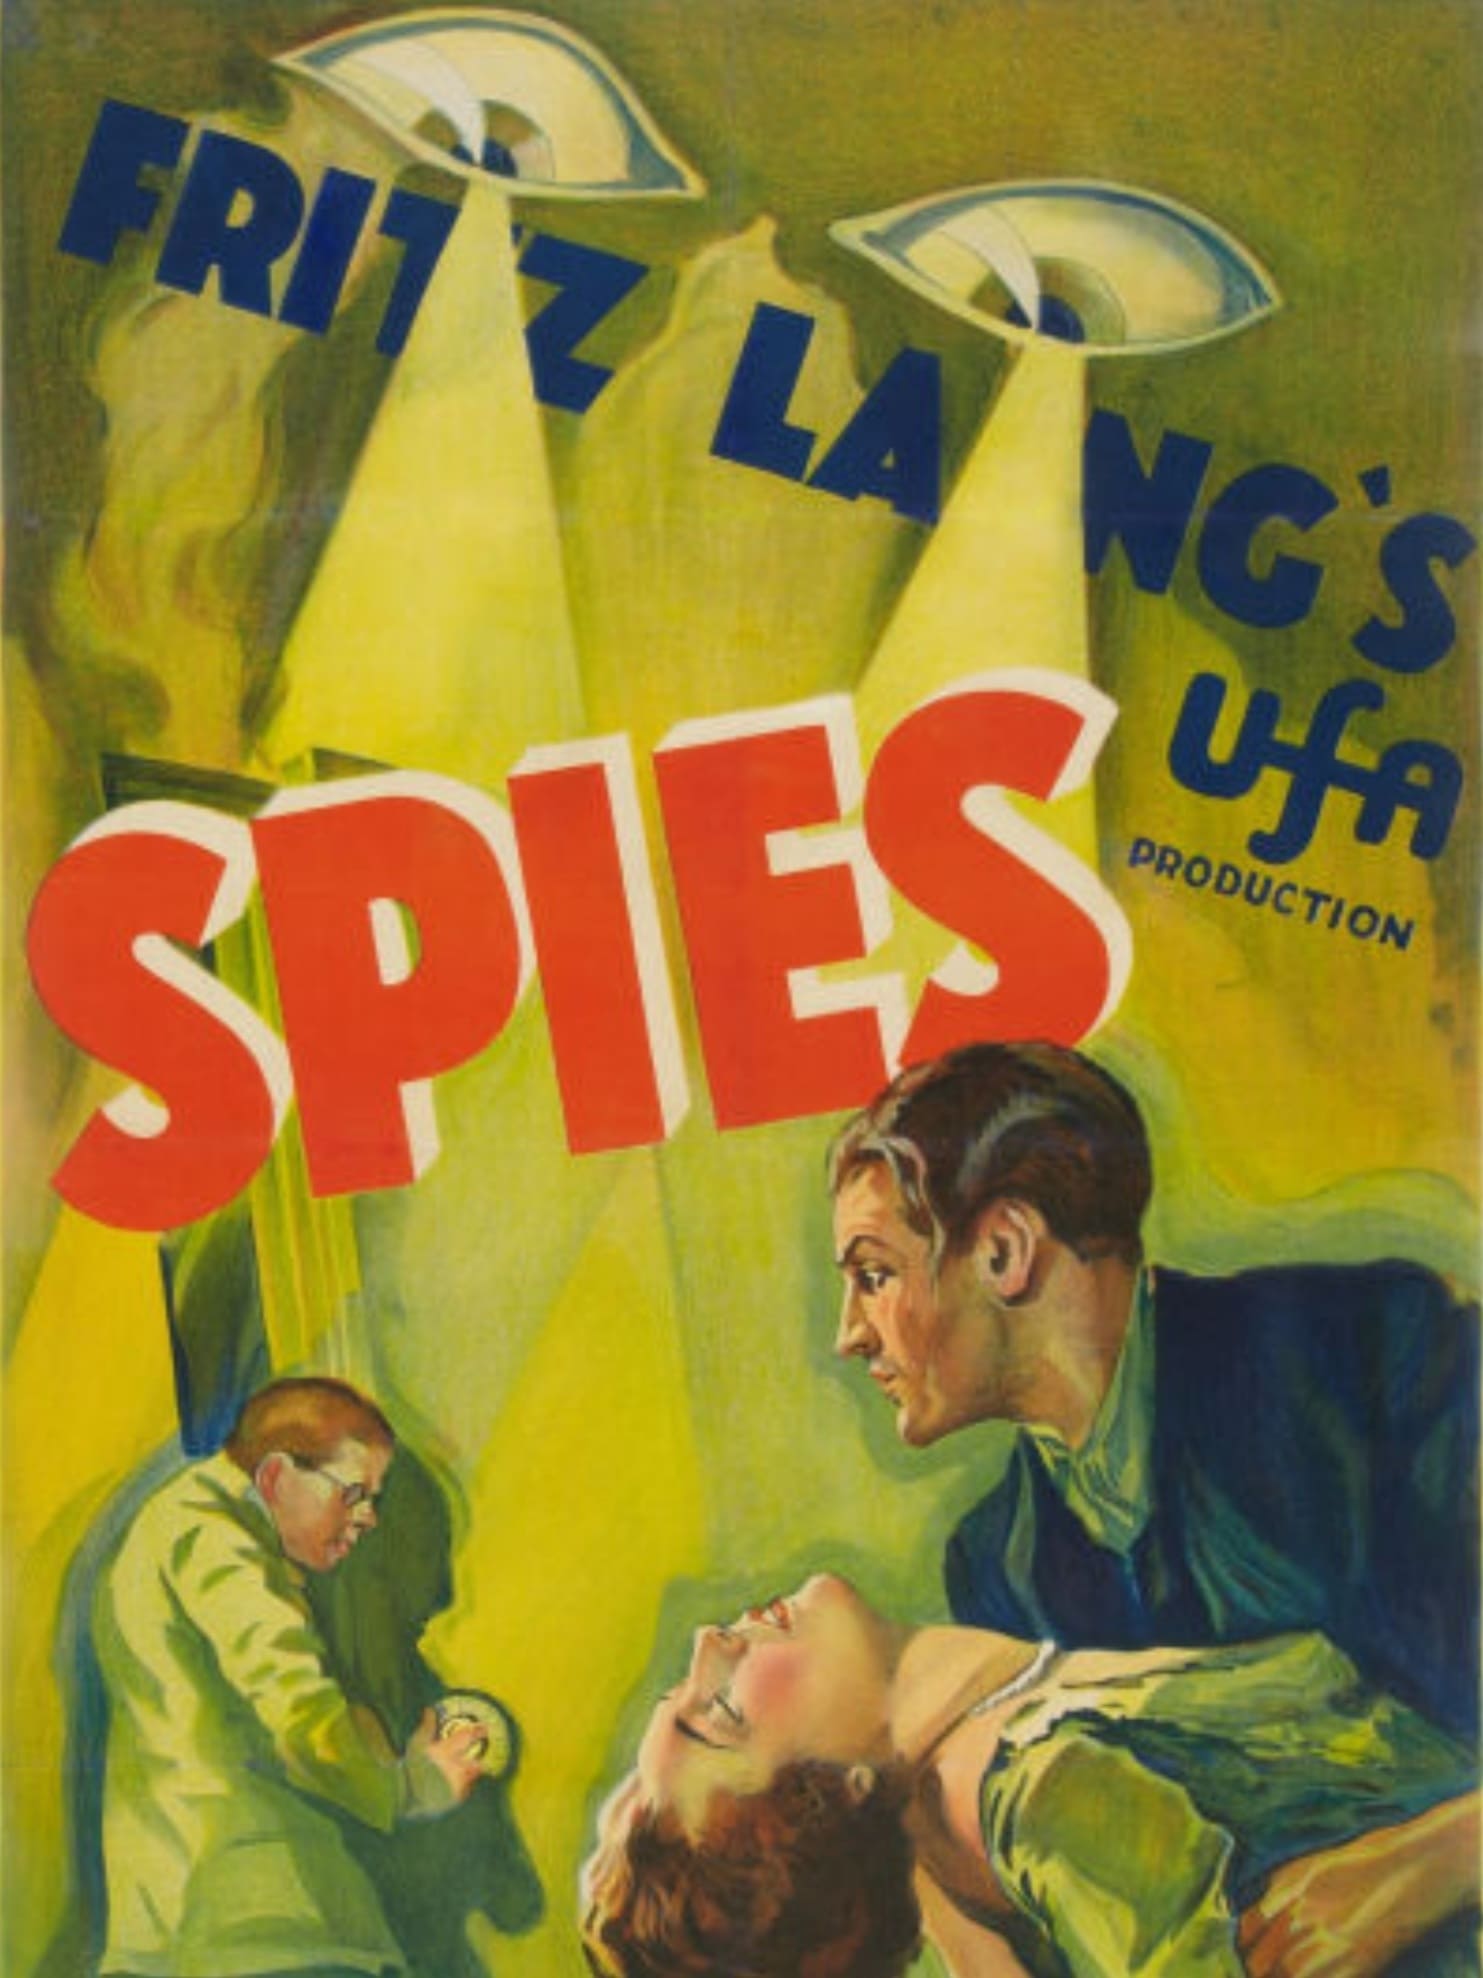 Spies (1928)